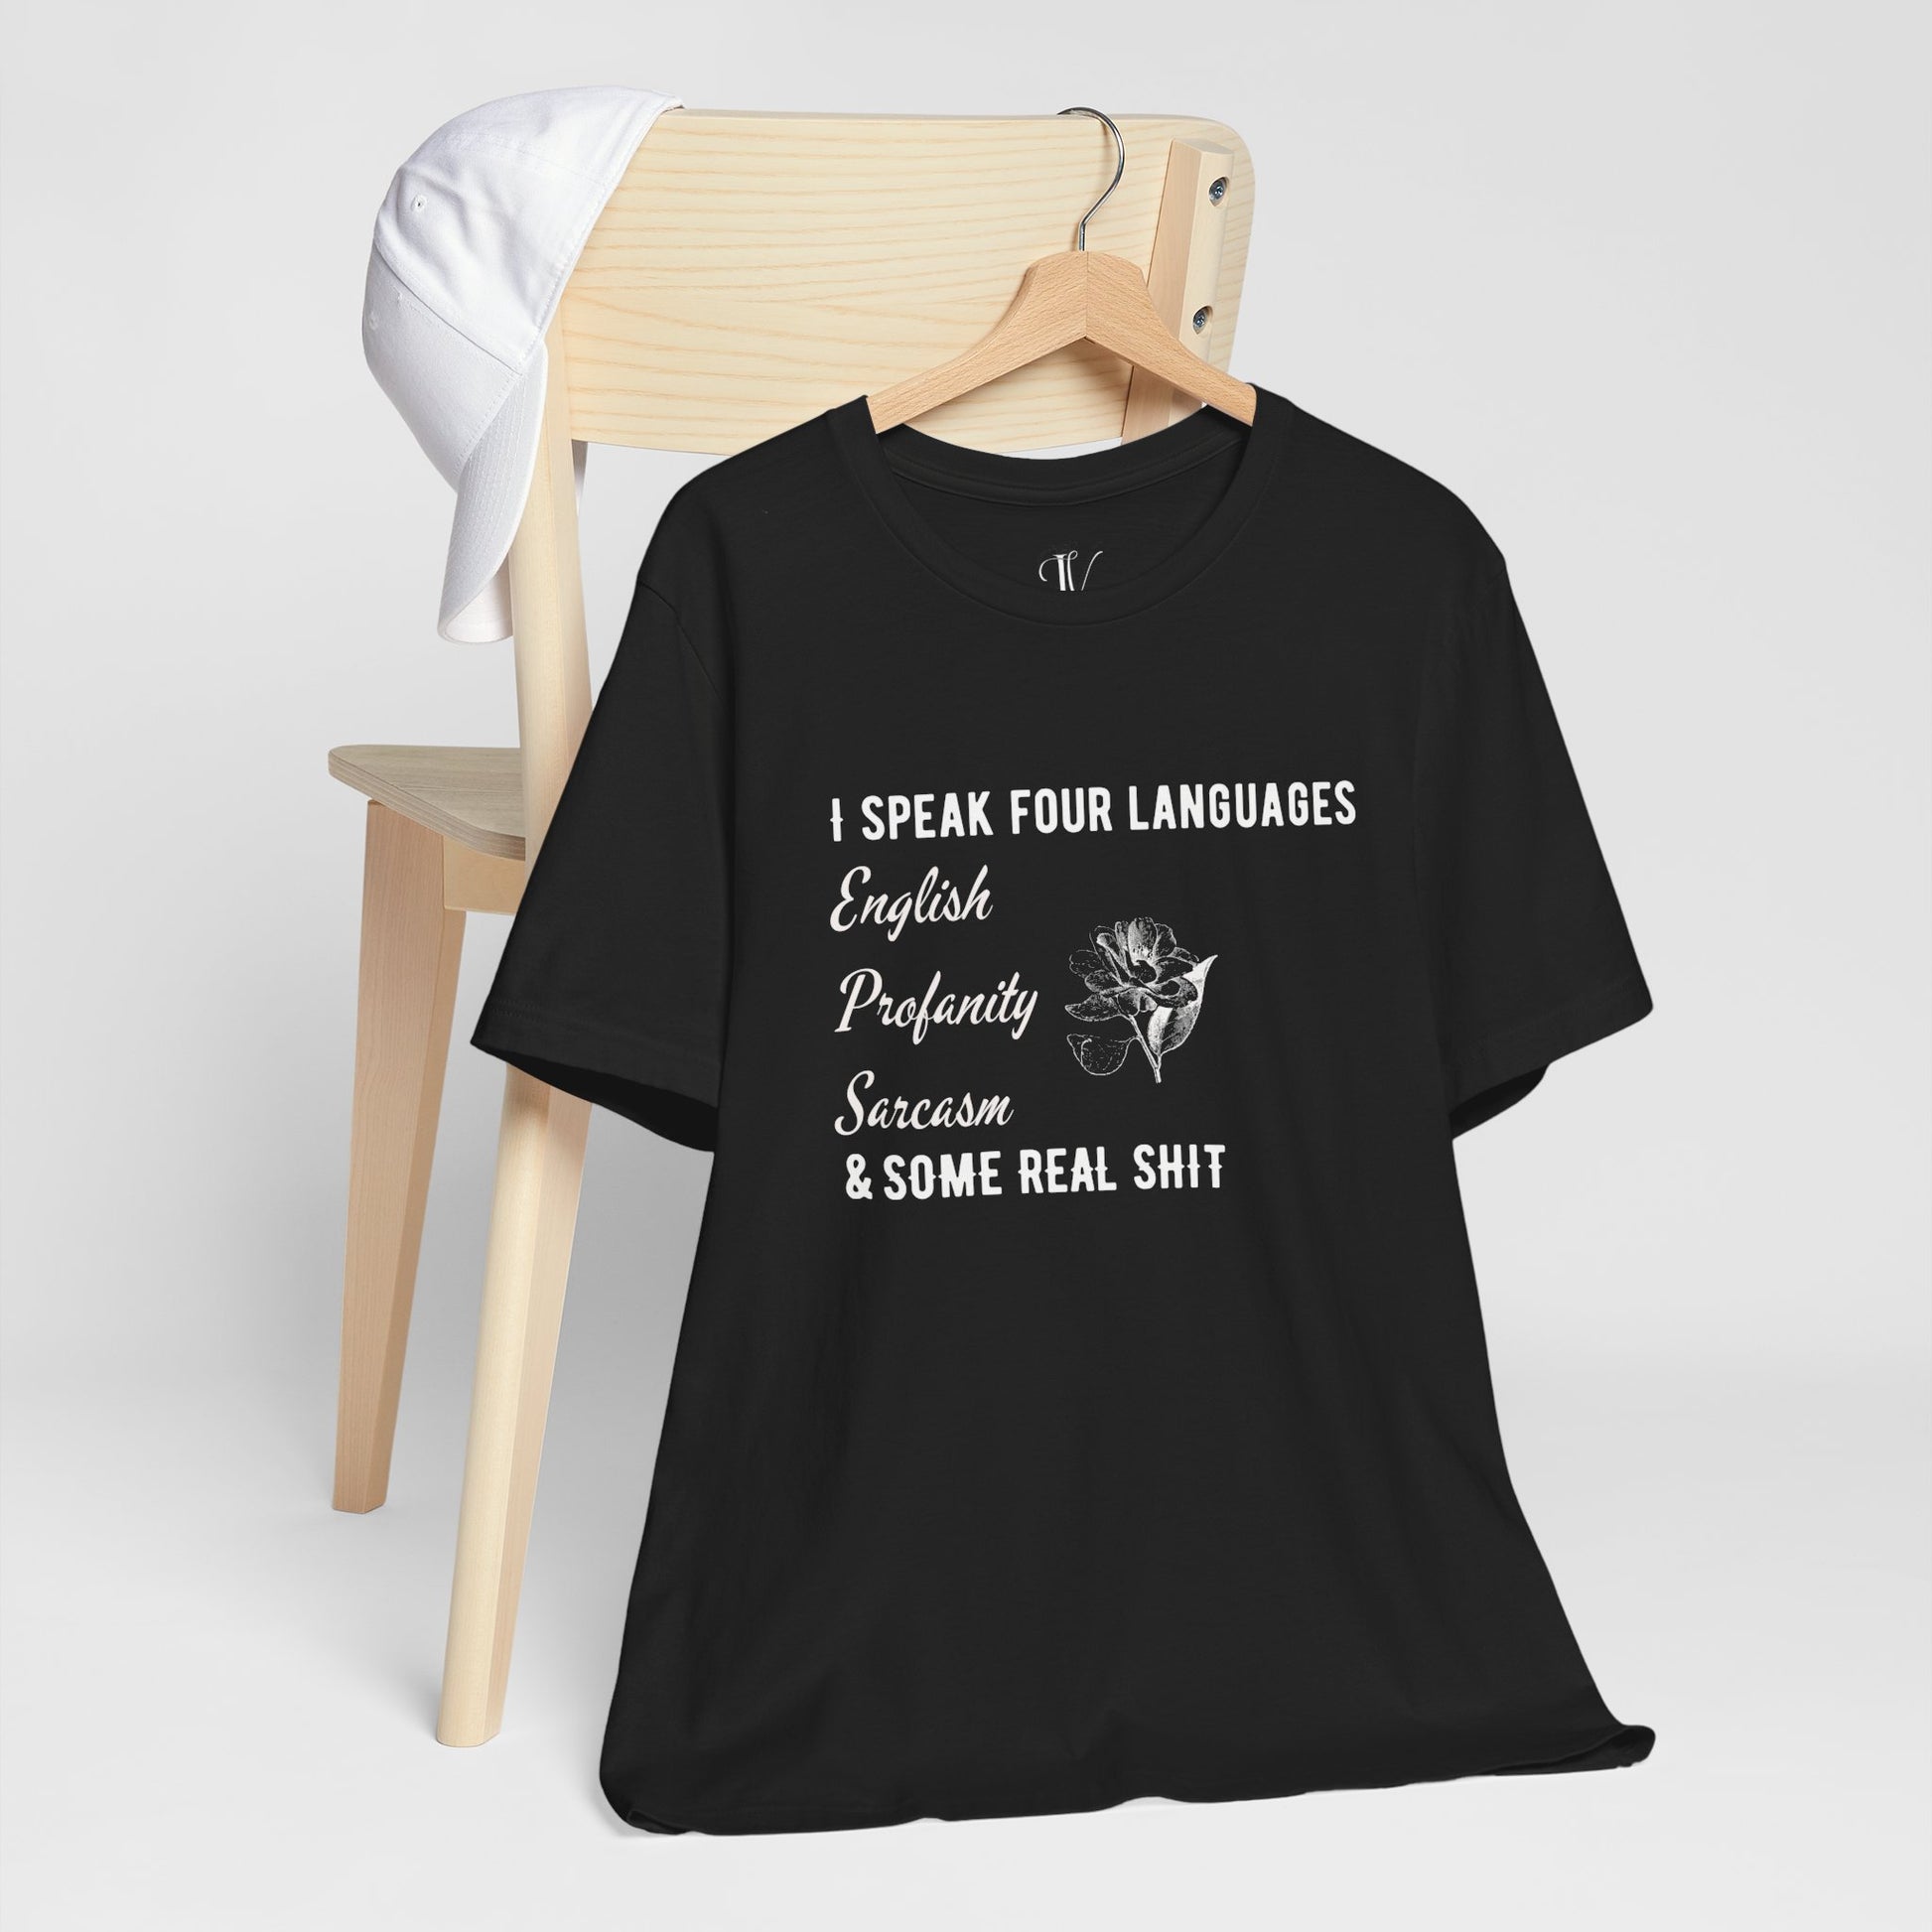 I Speak Four Languages T-Shirt - Sarcasm Era Shirt - Sarcastic Tee